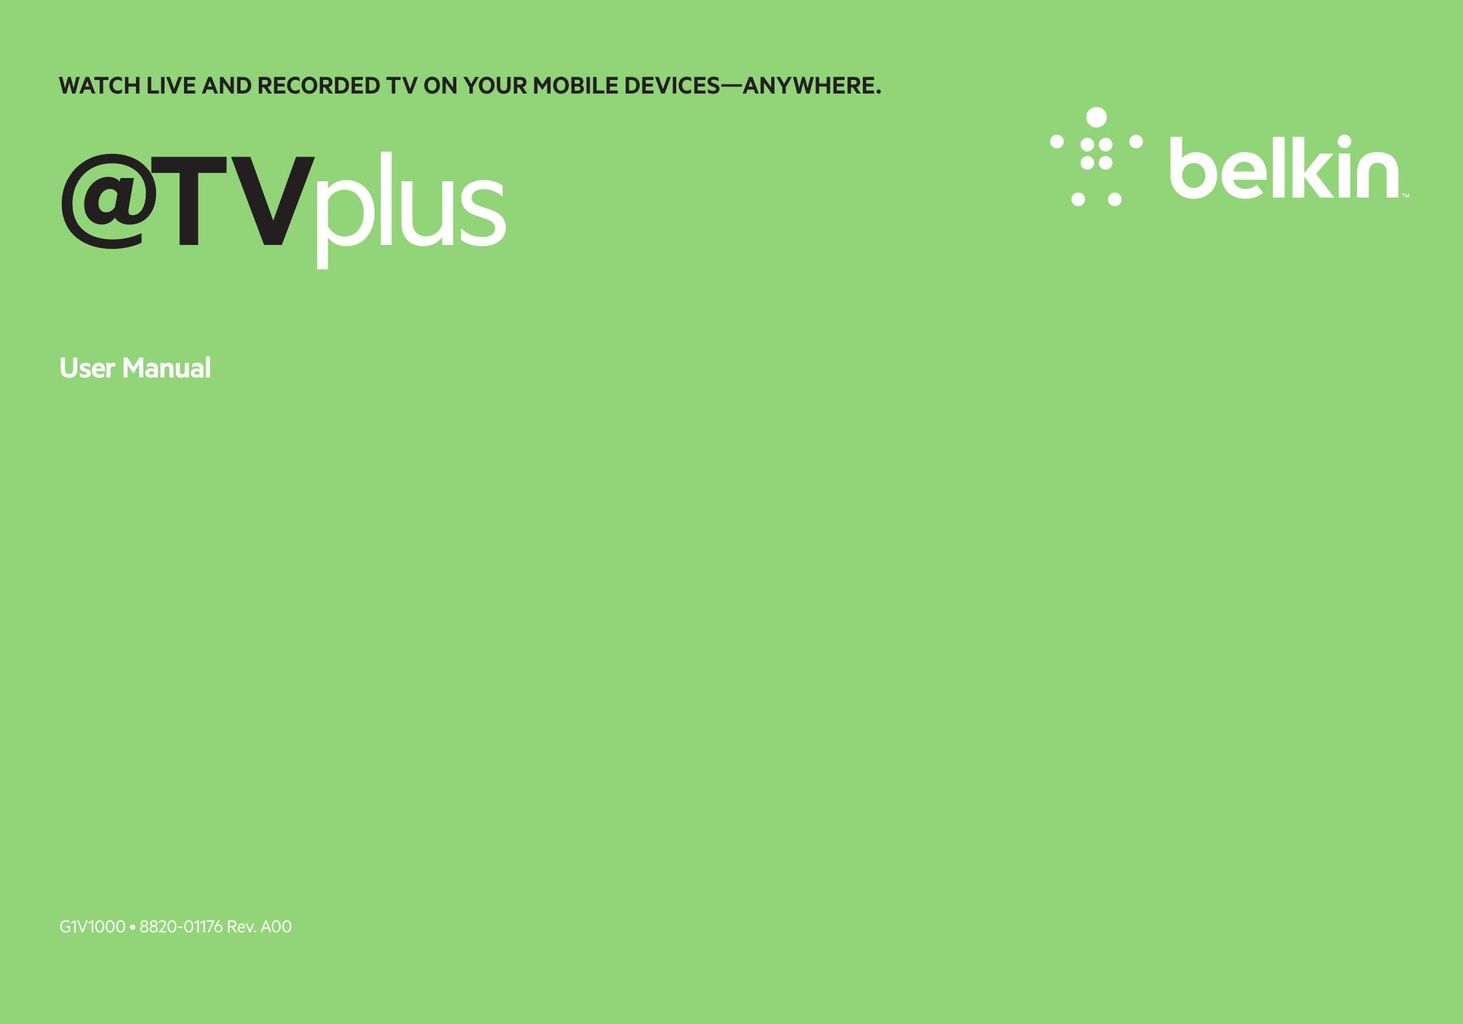 Belkin G1V1000 8820-01176 TV Receiver User Manual